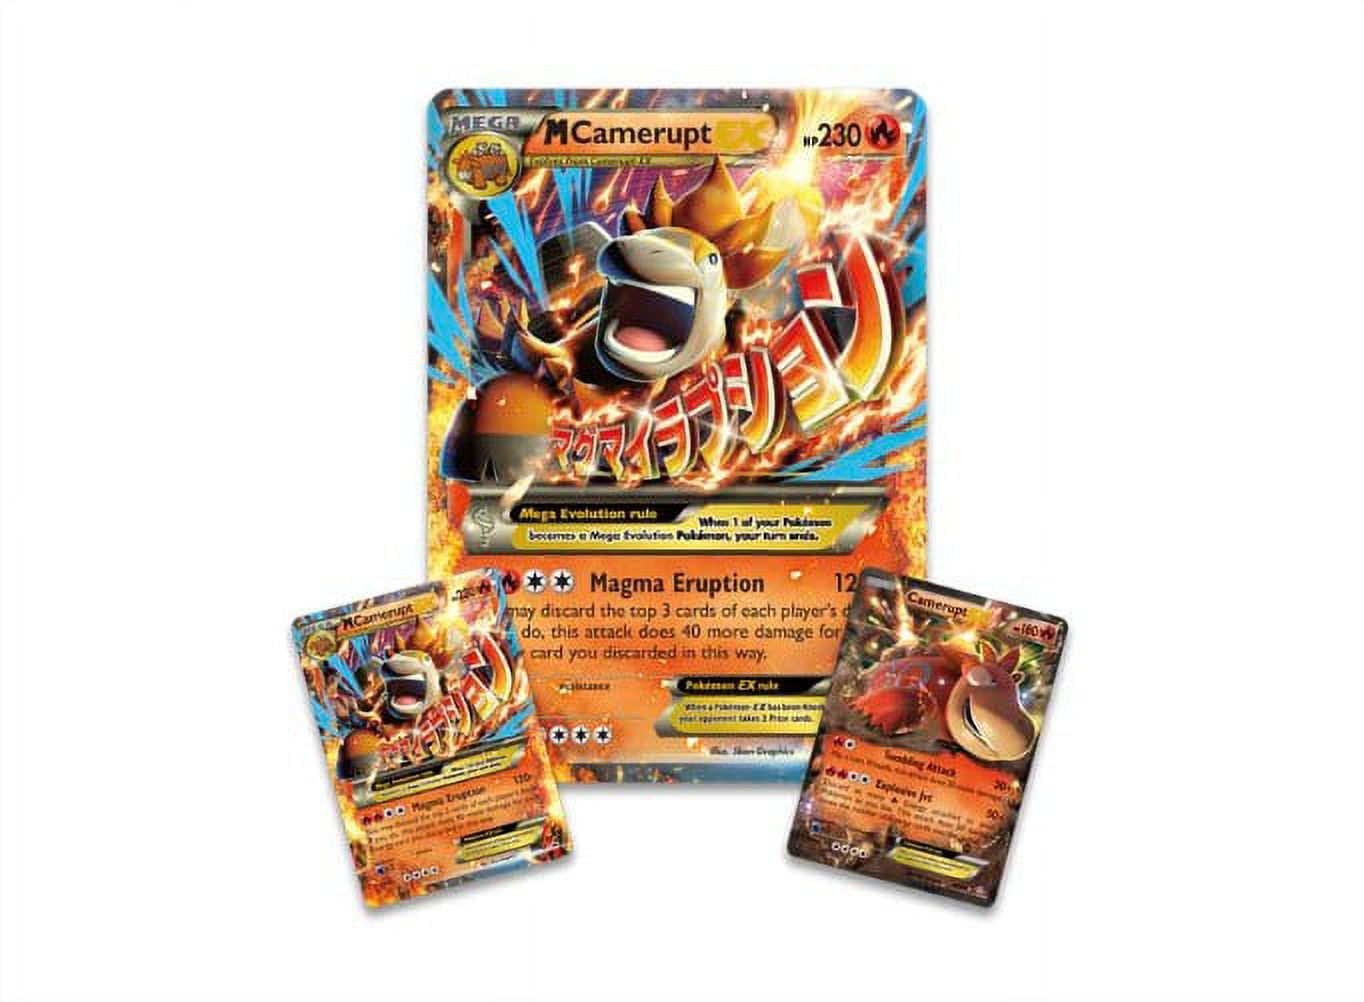 Jogo Deluxe - Box Pokémon - Mega Sharpedo-Ex - Copag - Ri Happy